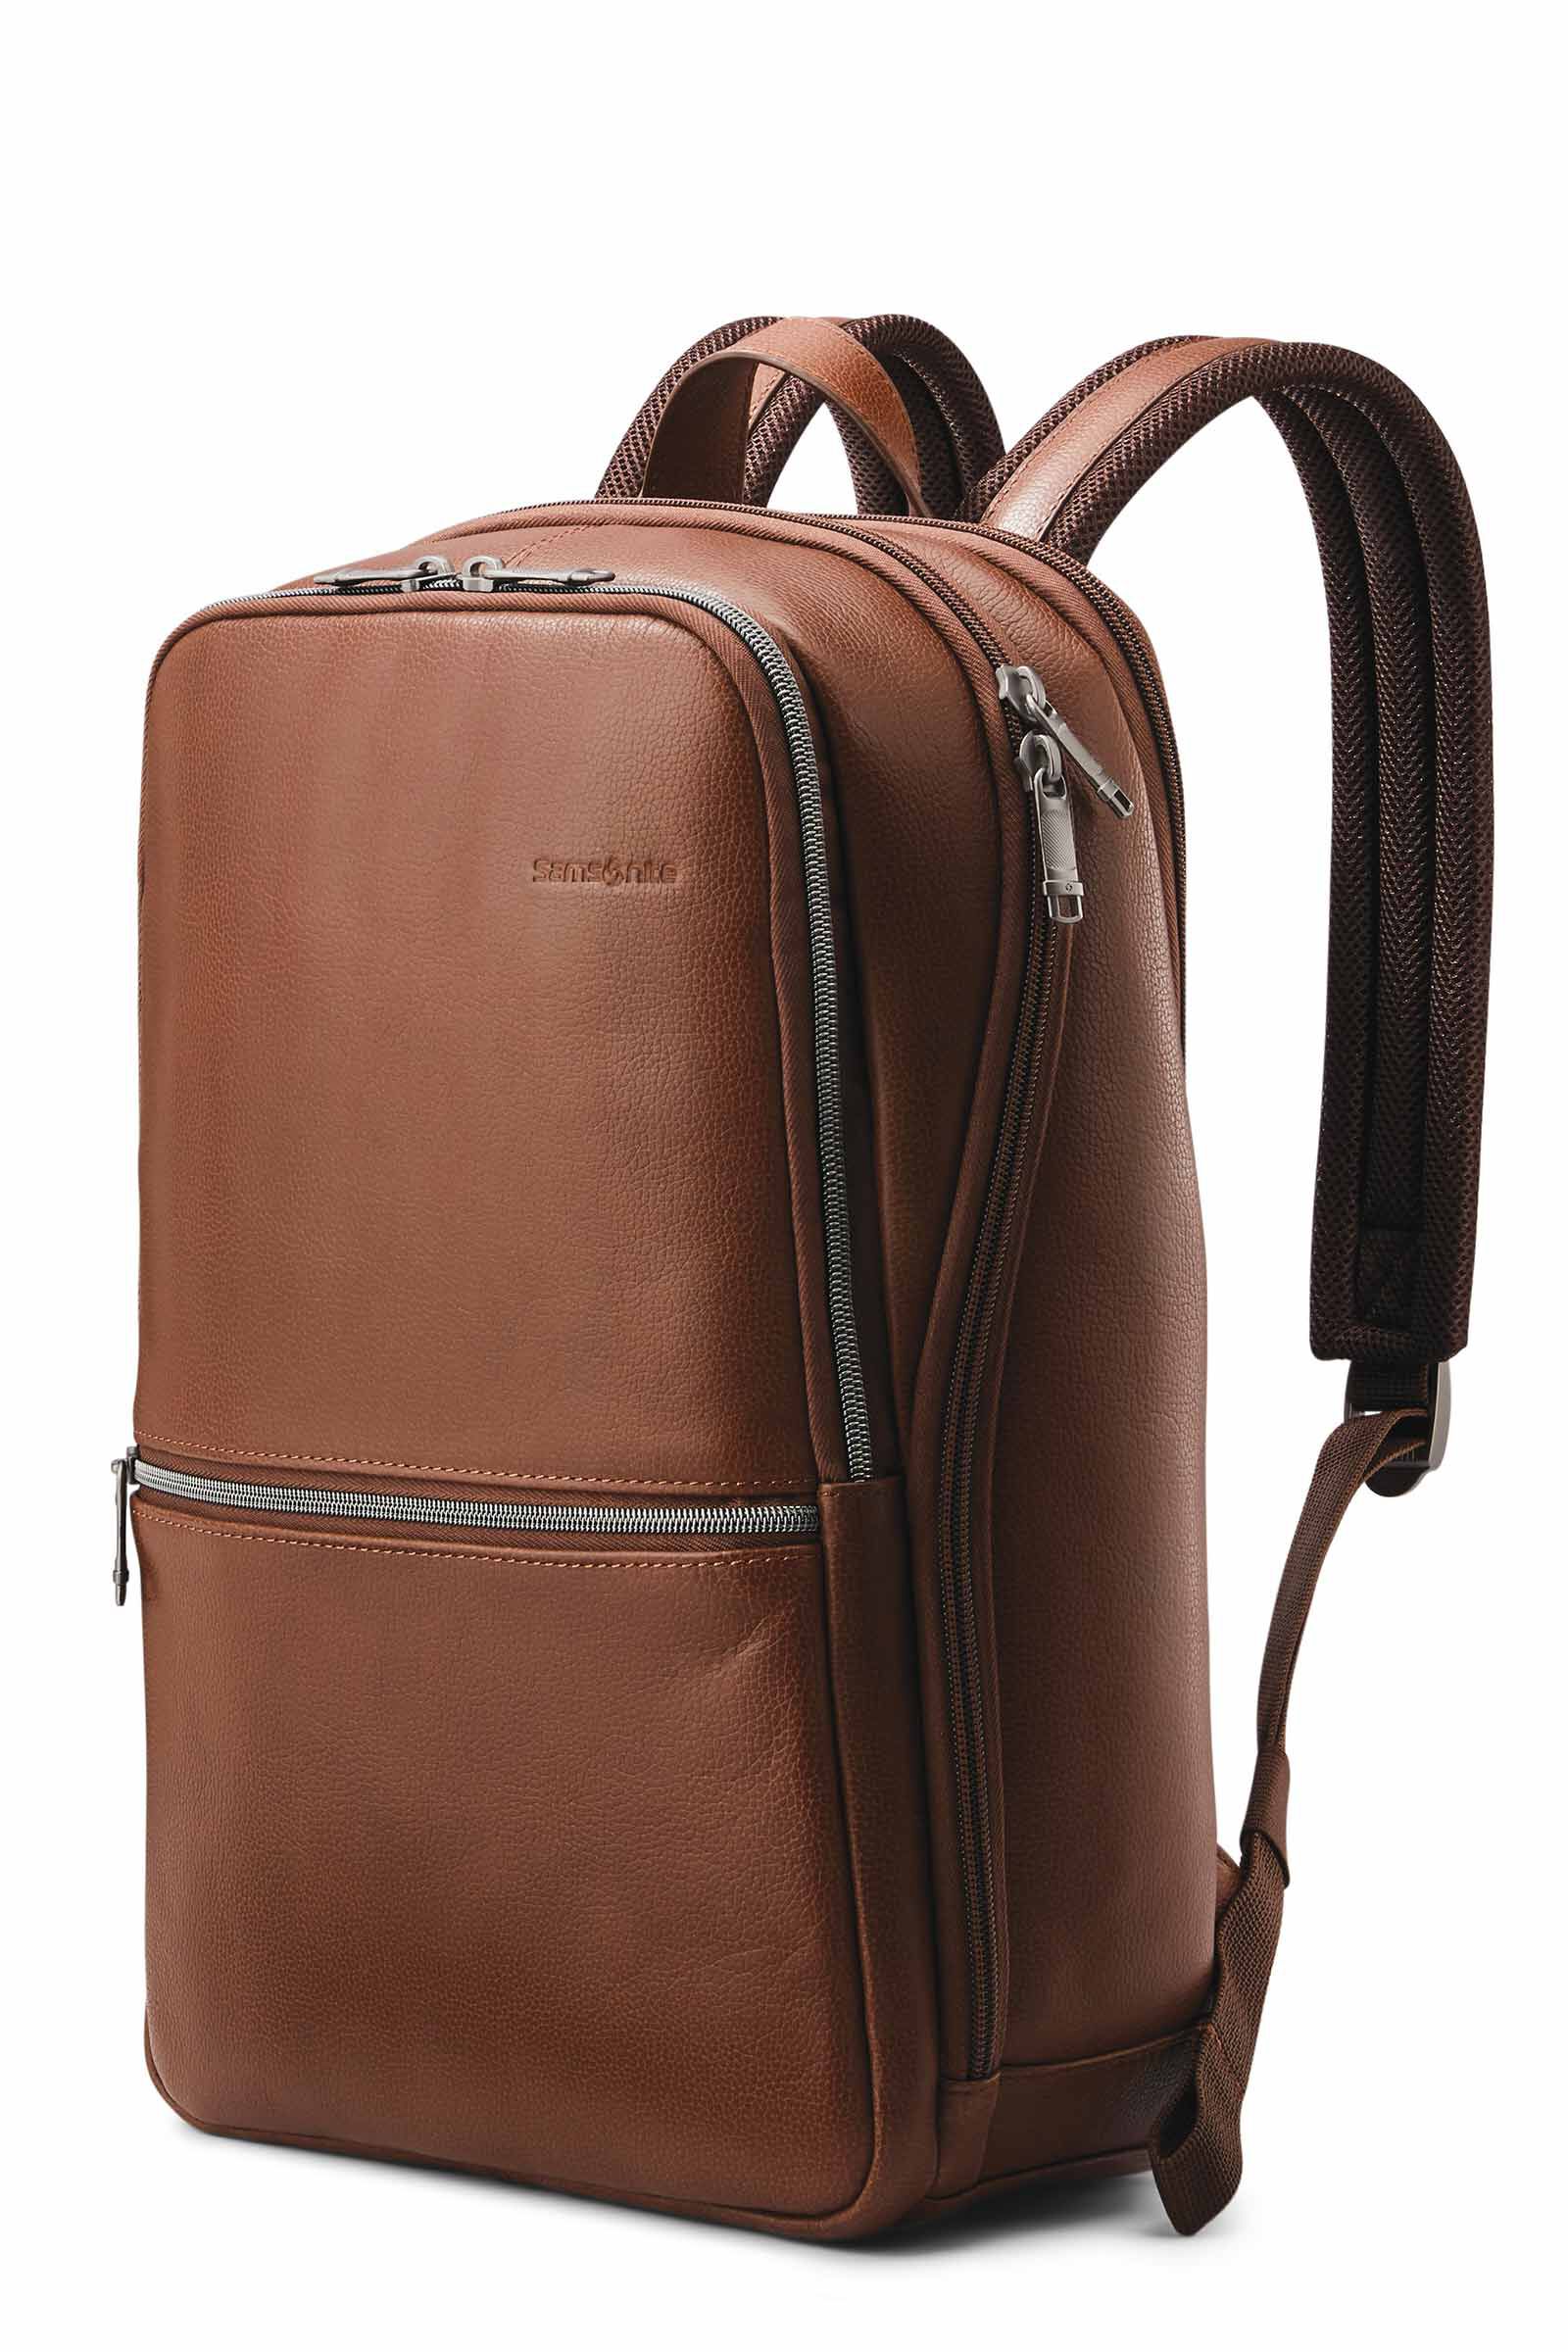 Olive Nylon PORTER Slim Backpack | Mackintosh